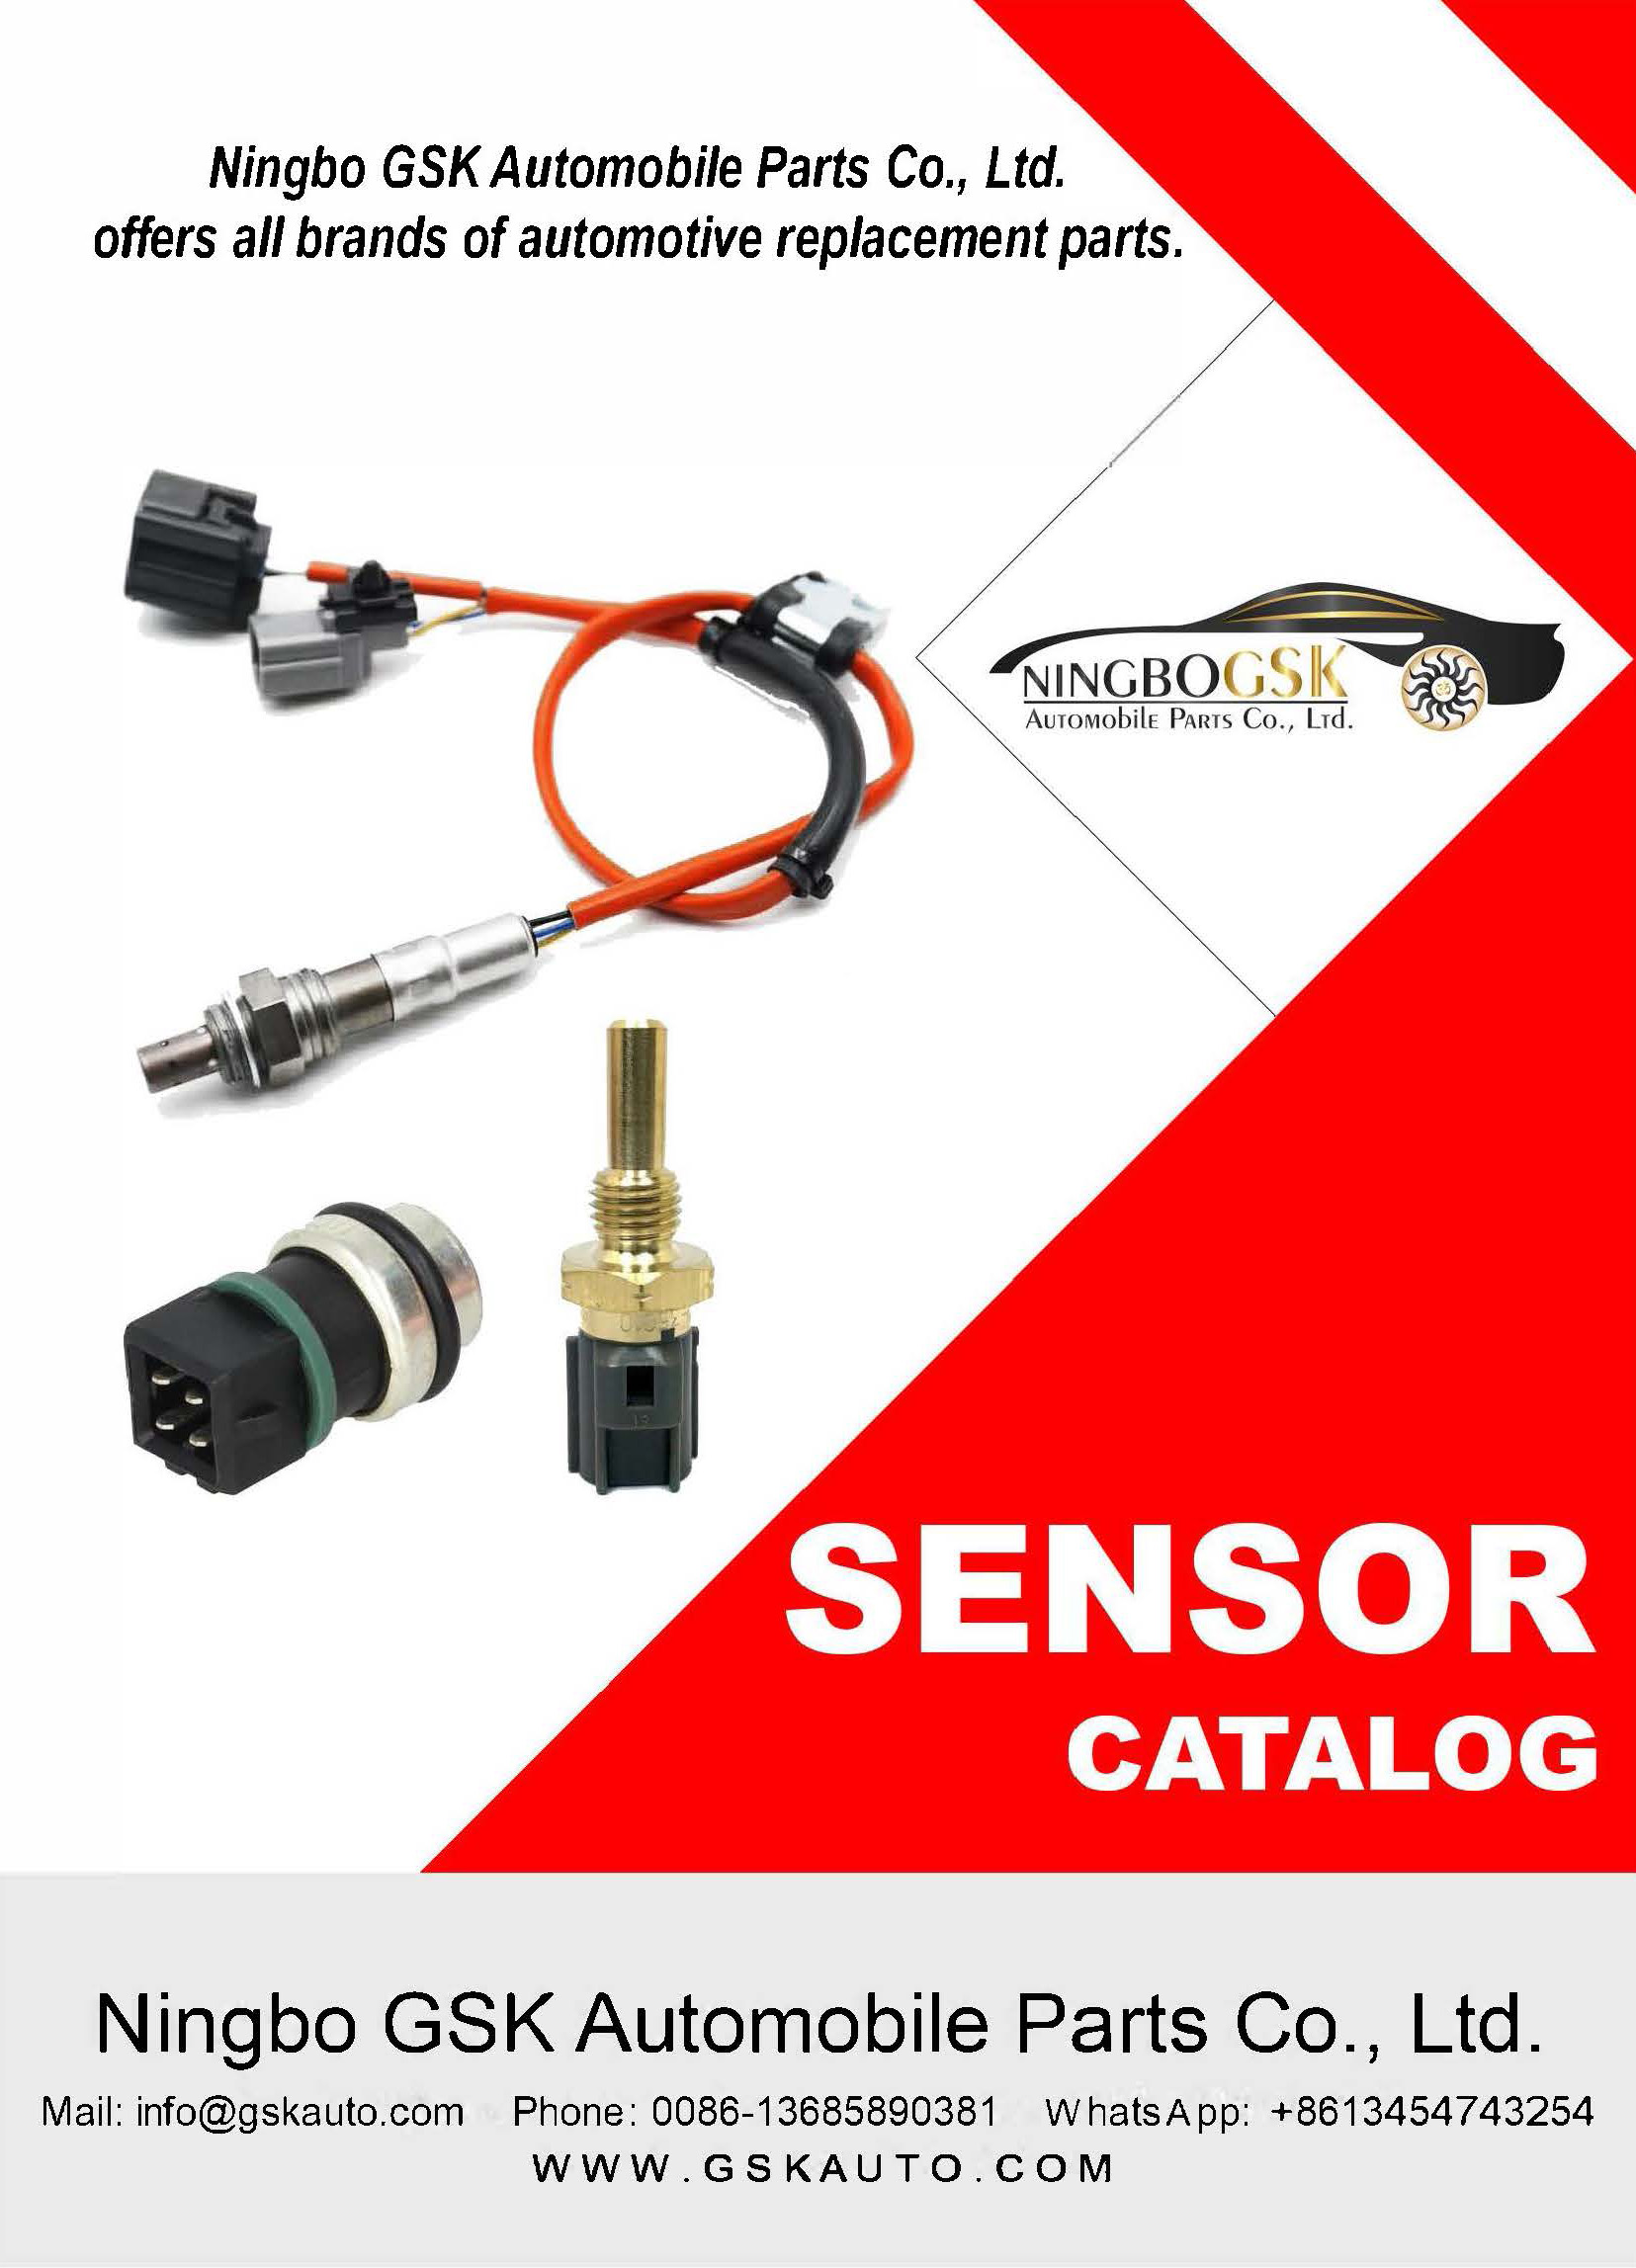 Sensors Catalog